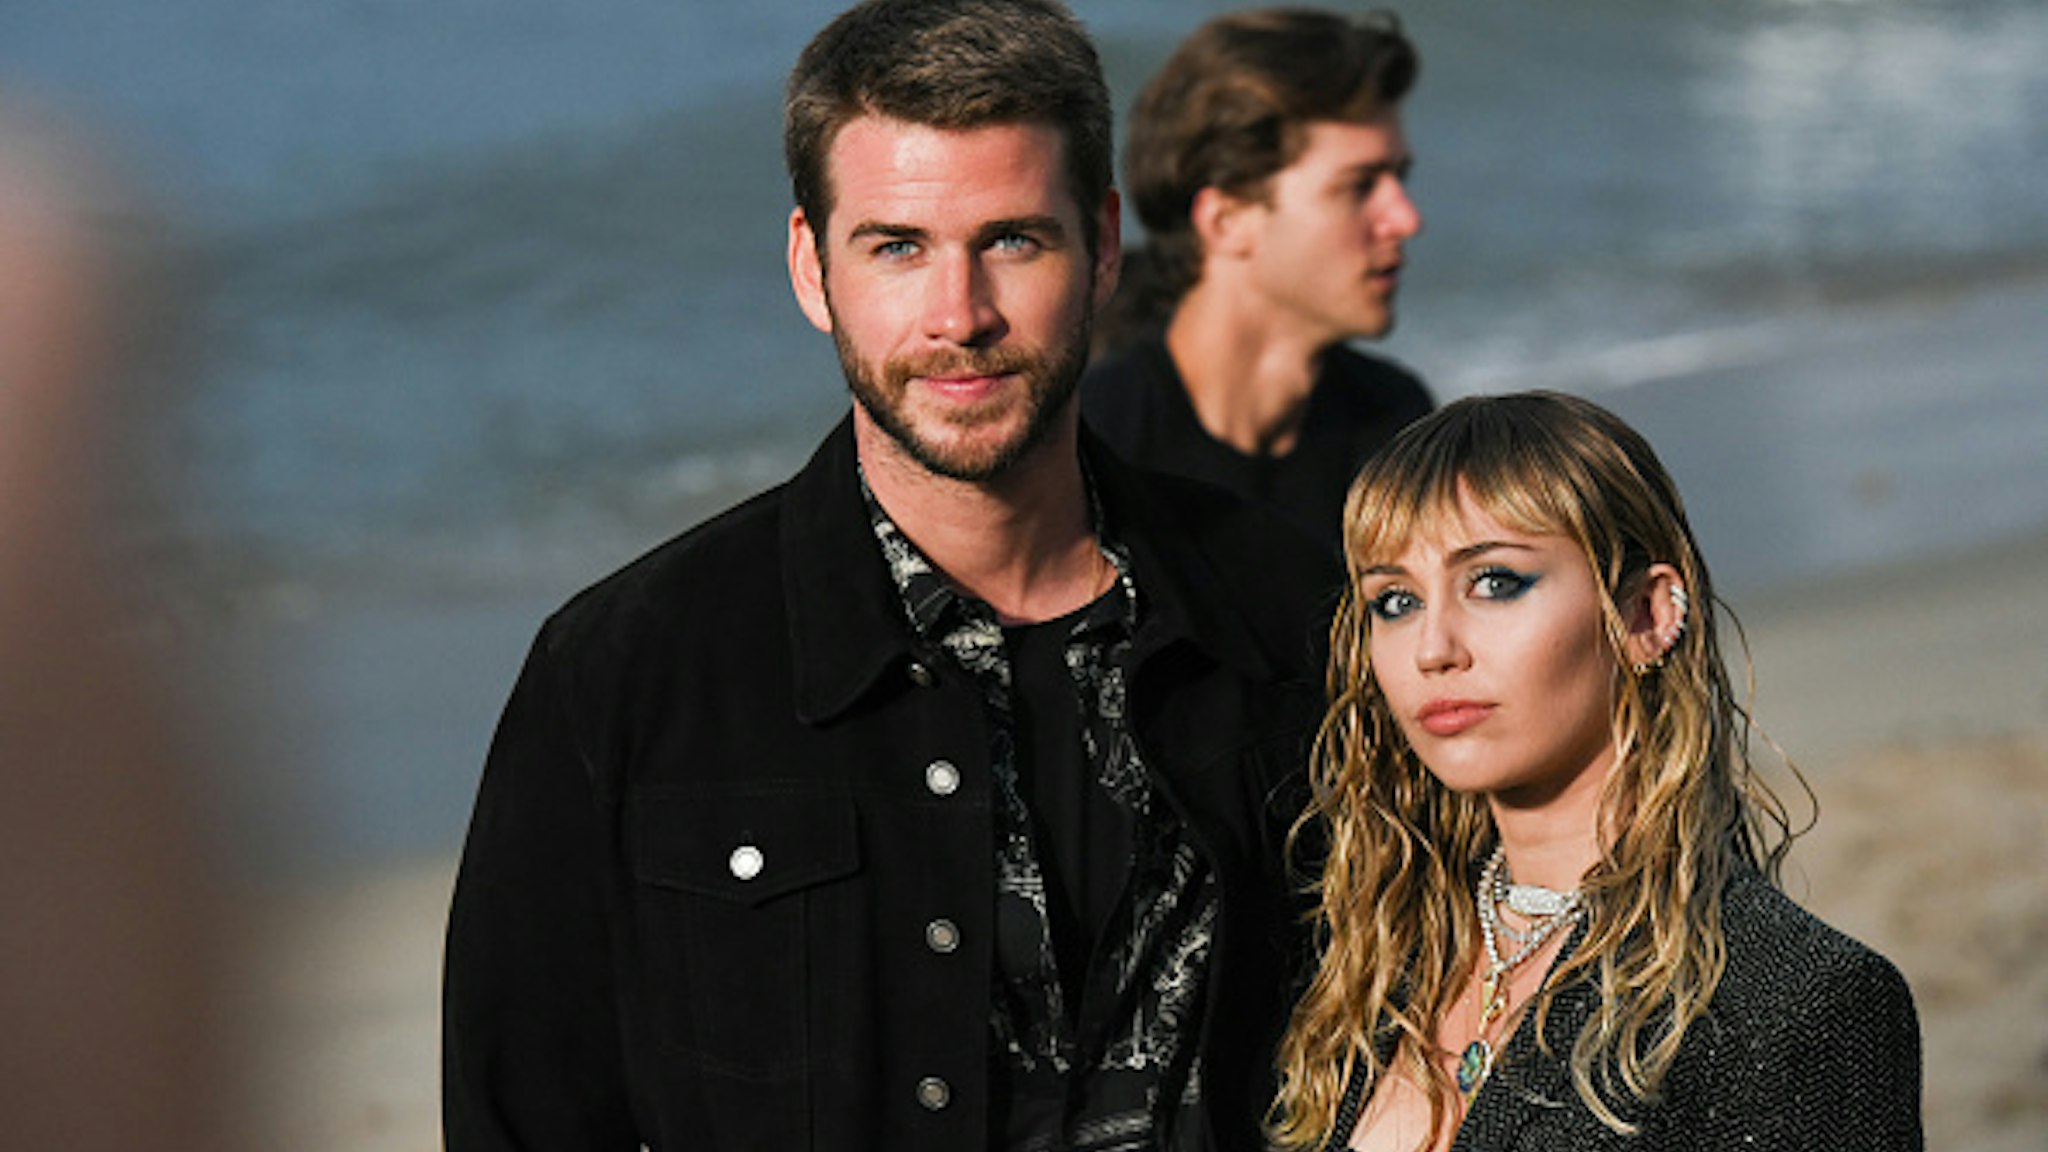 MALIBU, CALIFORNIA - JUNE 06: Liam Hemsworth and Miley Cyrus at Saint Laurent mens spring summer 20 show on June 06, 2019 in Malibu, California.